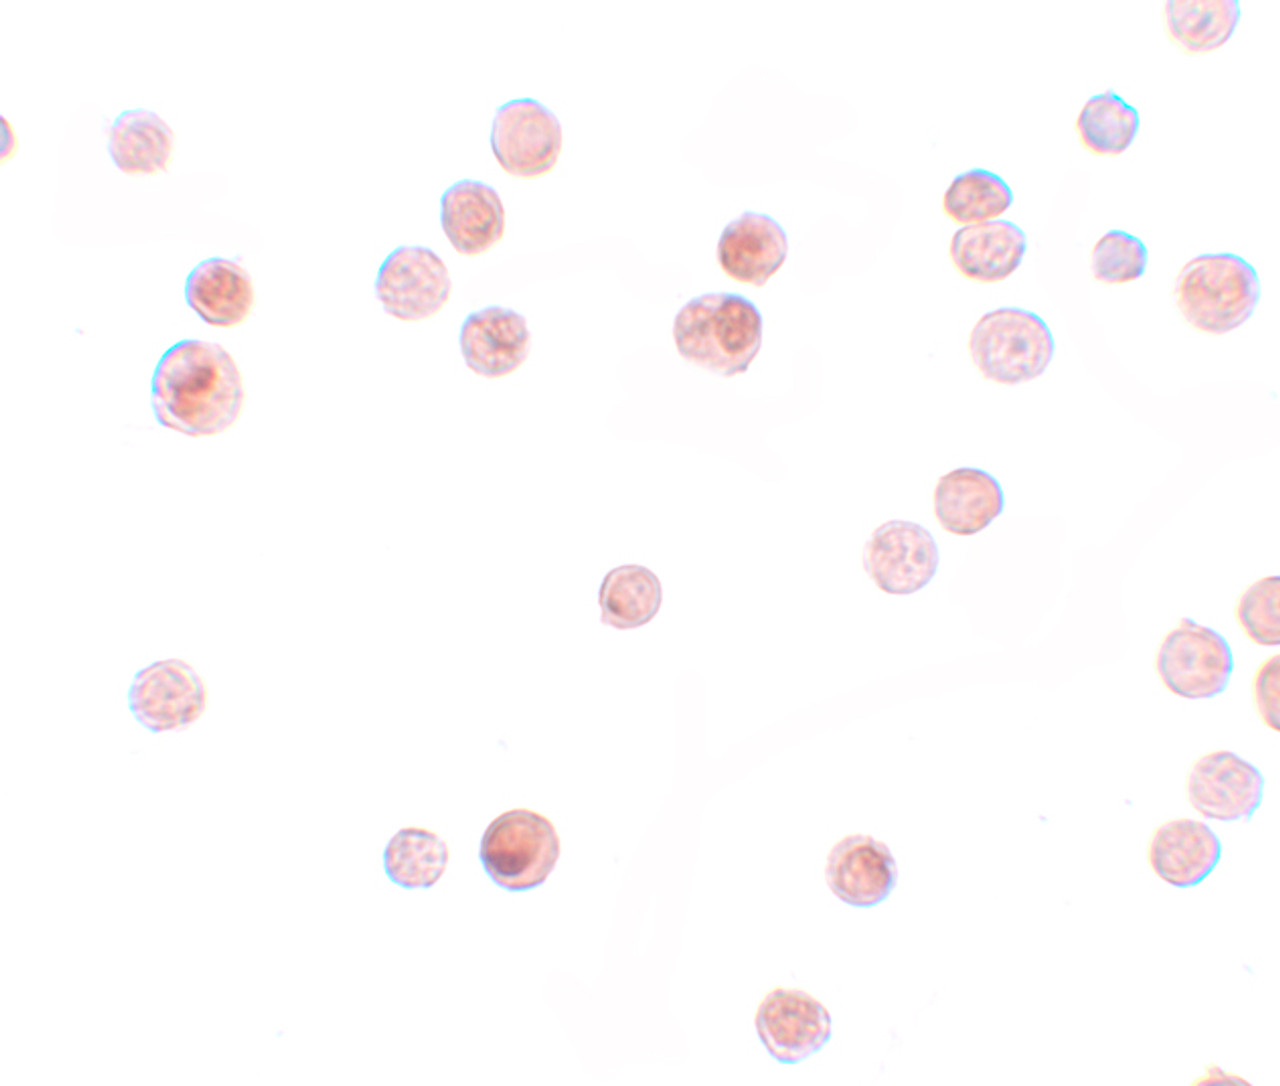 Immunocytochemistry of KPNA4 in HeLa cells with KPNA4 antibody at 2.5 ug/mL.